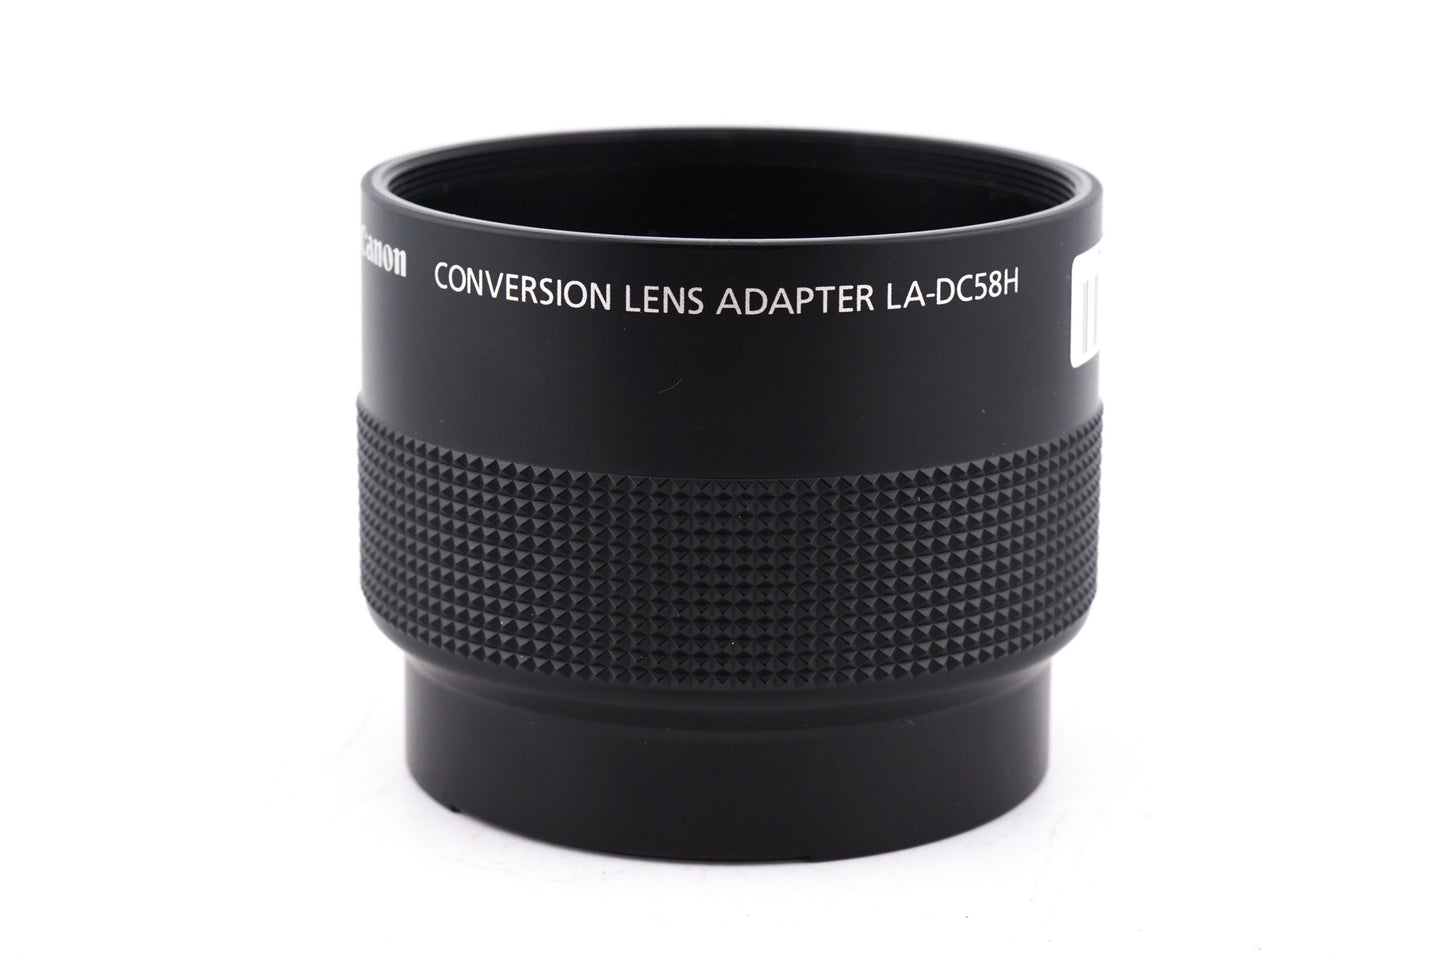 Canon LA-DC58H Conversion Lens Adapter